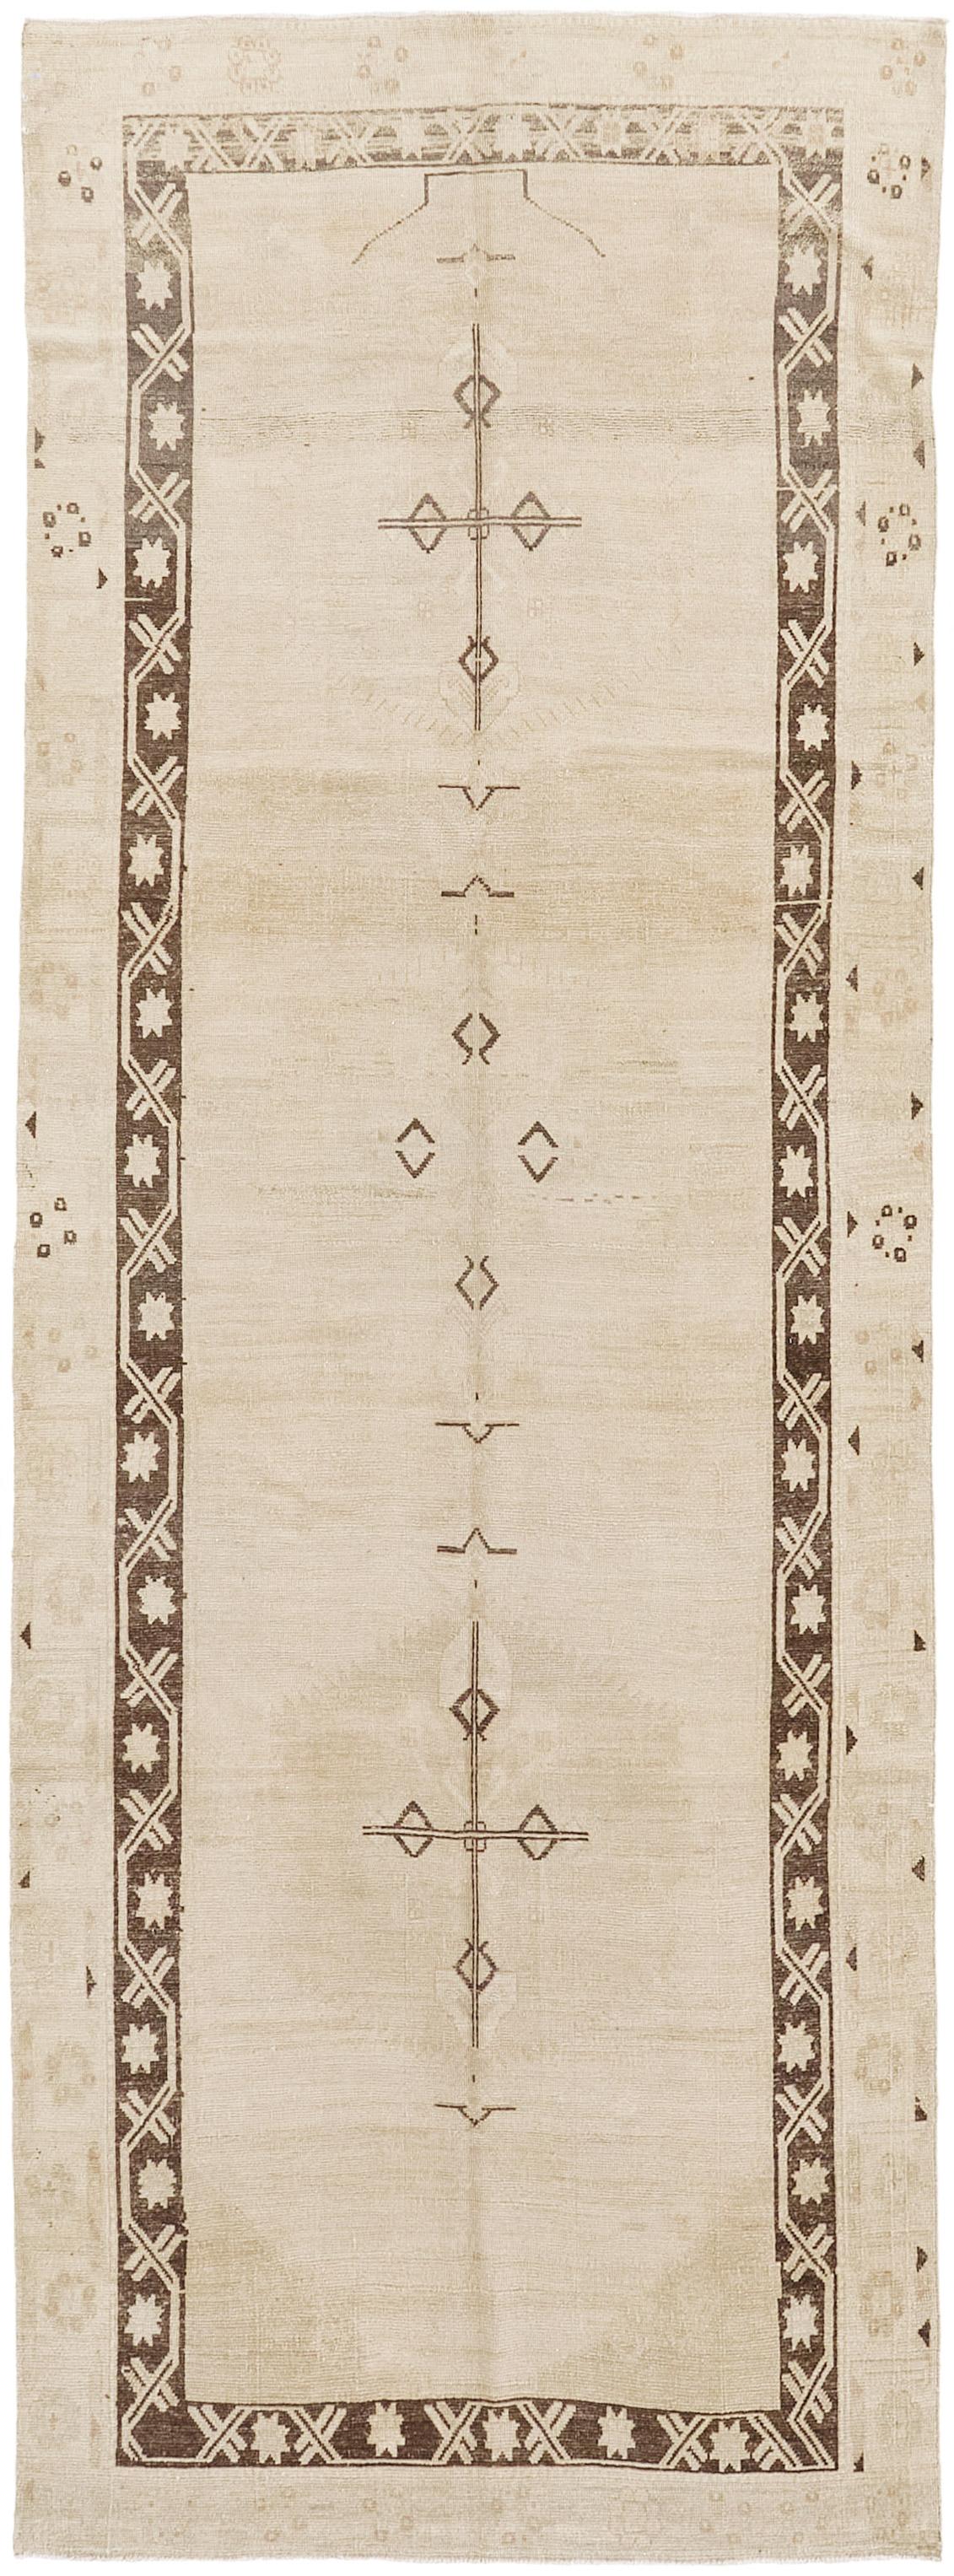 Vieux tapis turc d'Anatolie